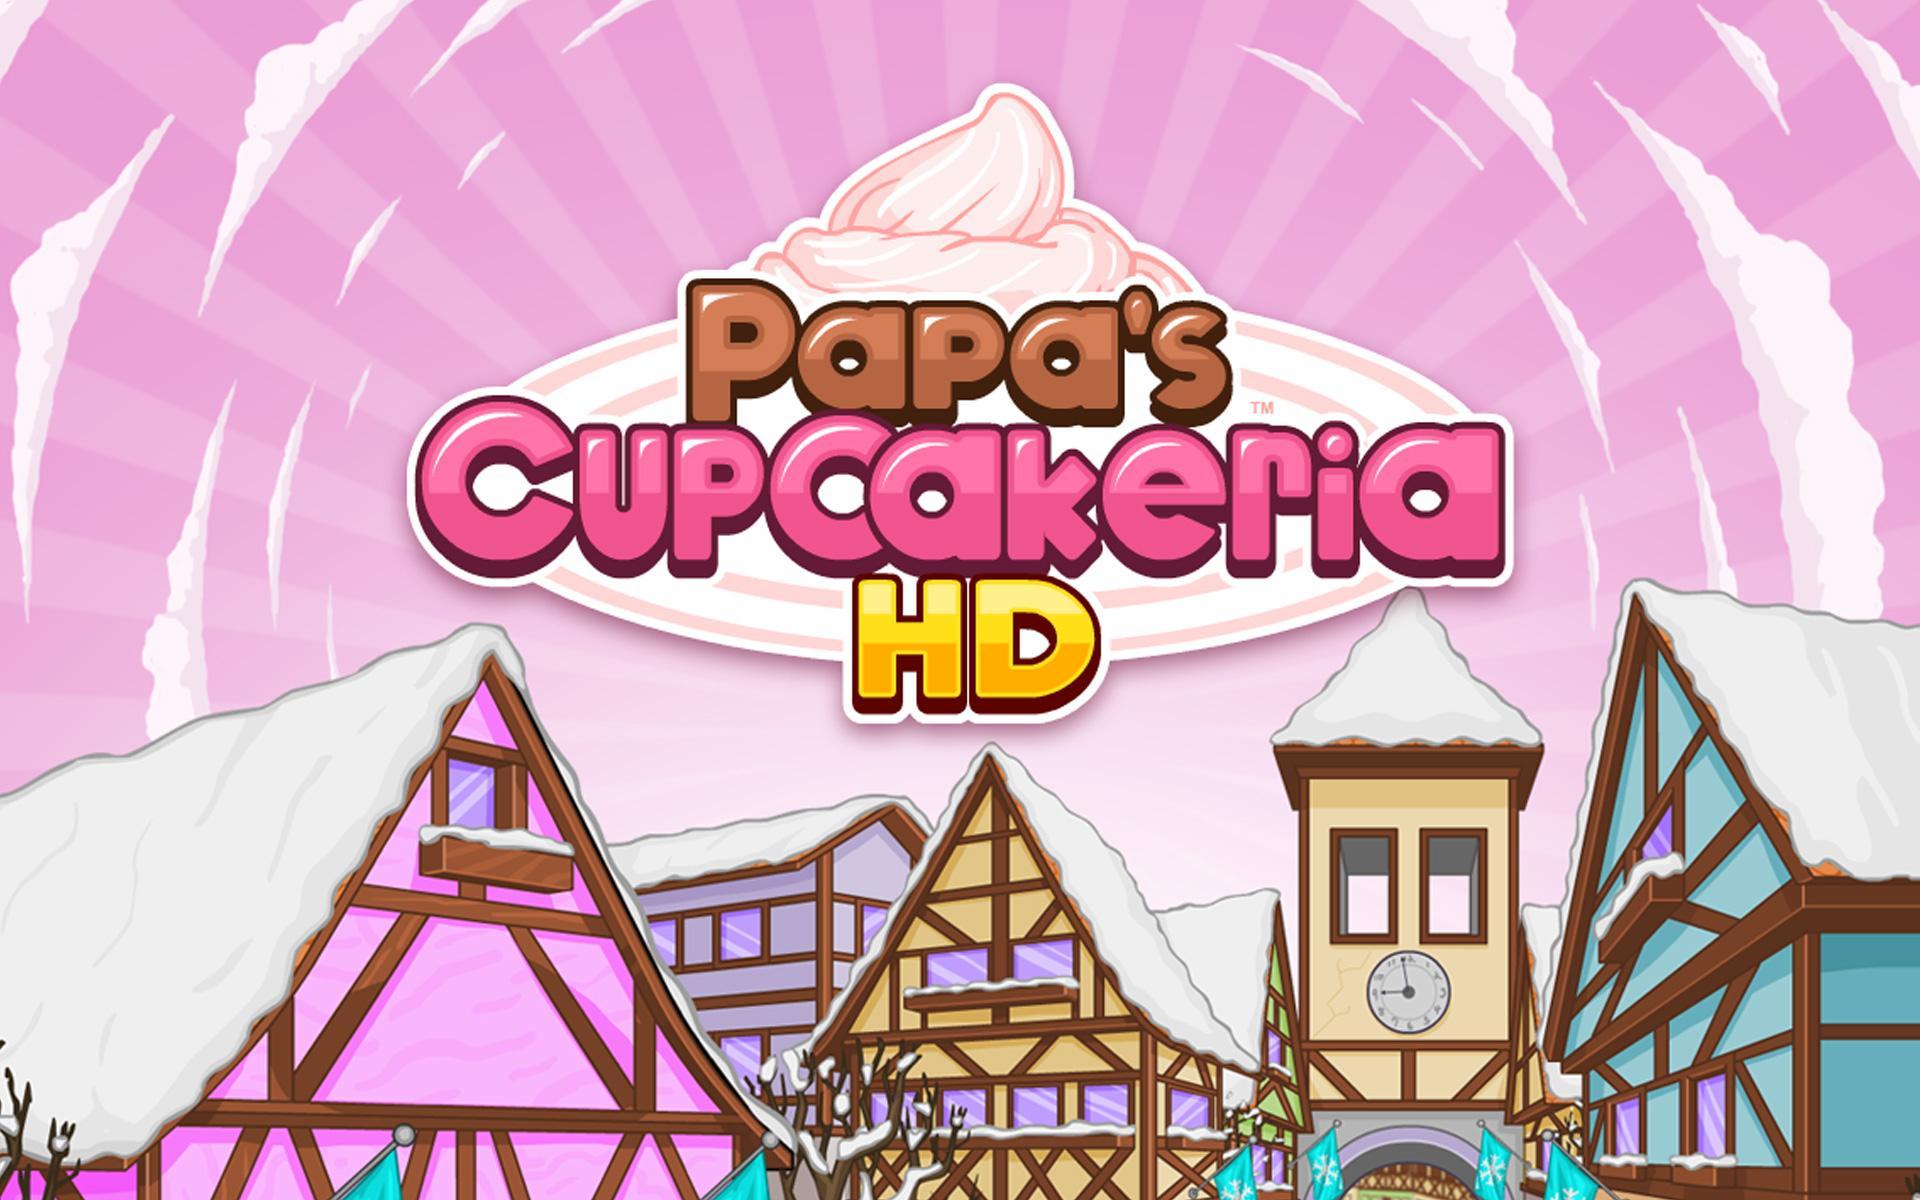 Screenshot 1 of Cupcakeria ของ Papa HD 